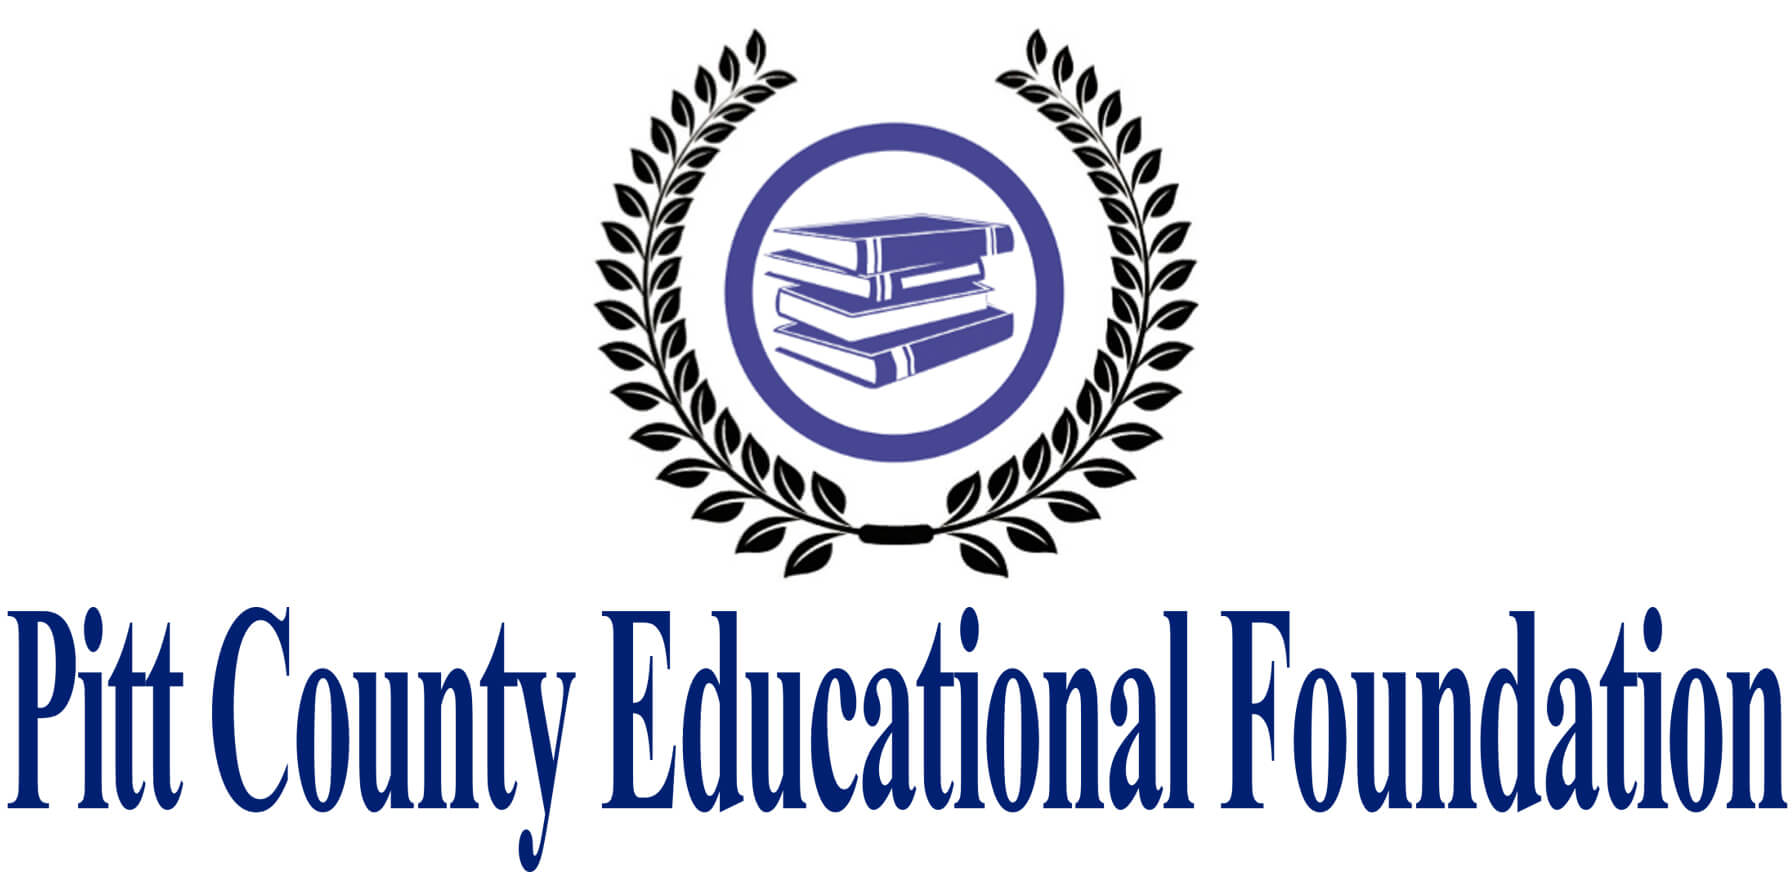 Pitt County Educational Foundation